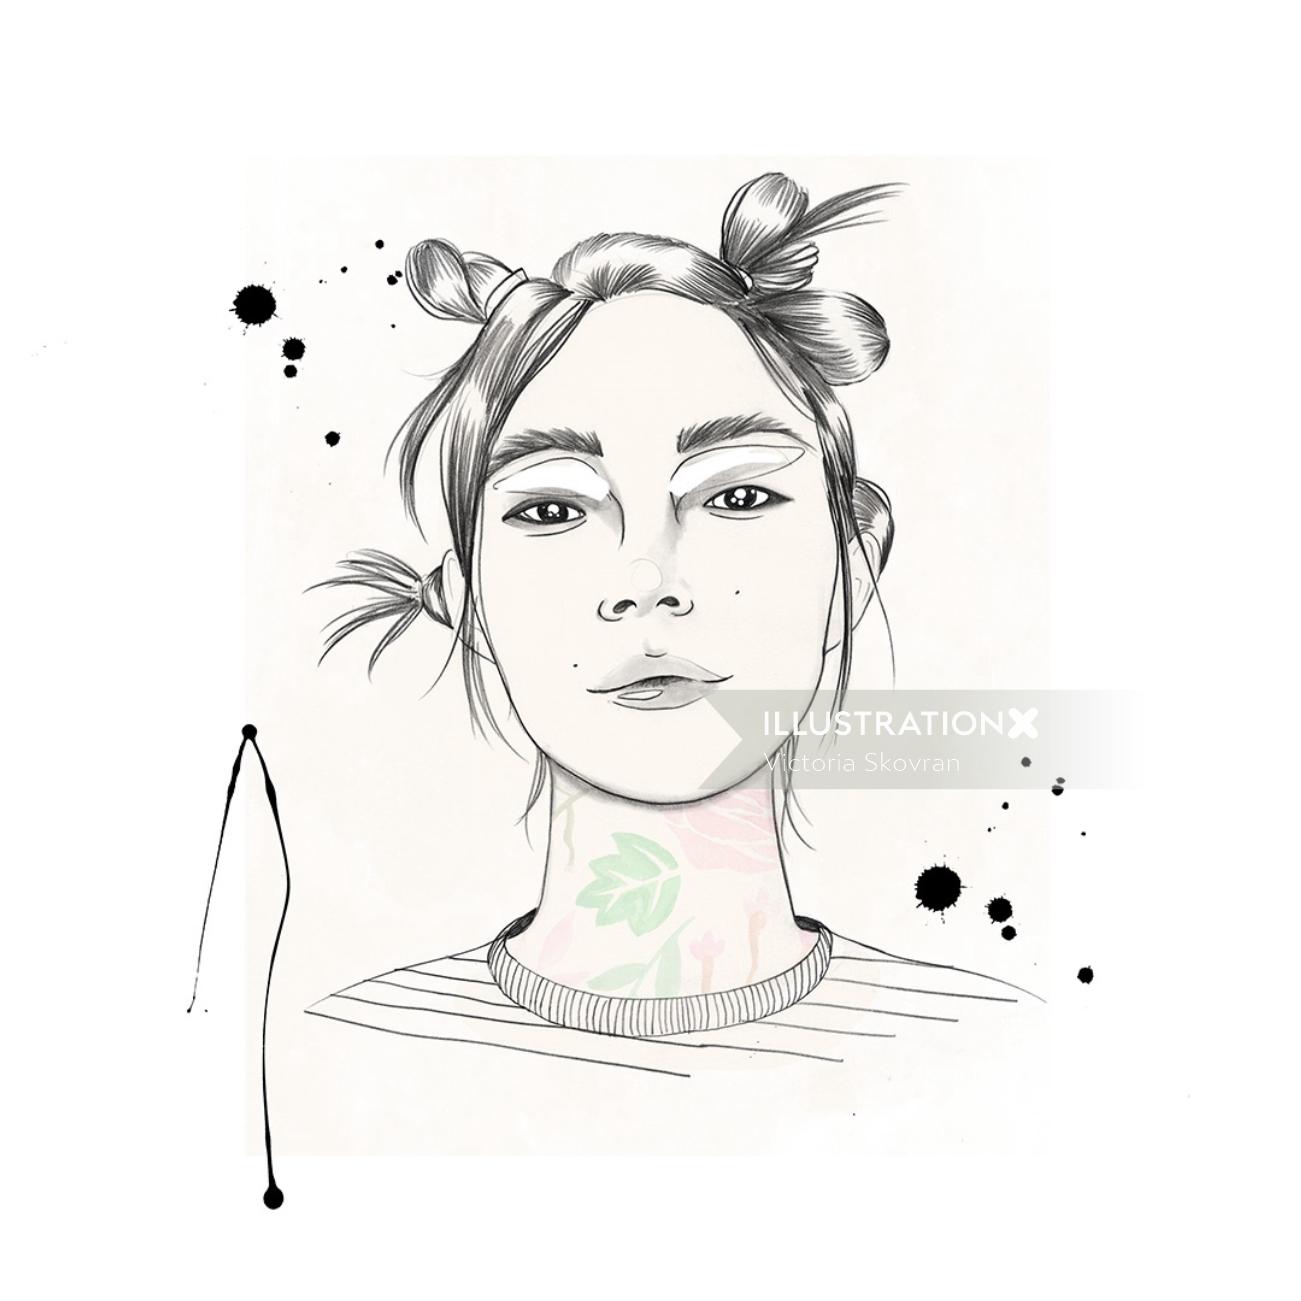 Lady face illustration by Victoria Skovran